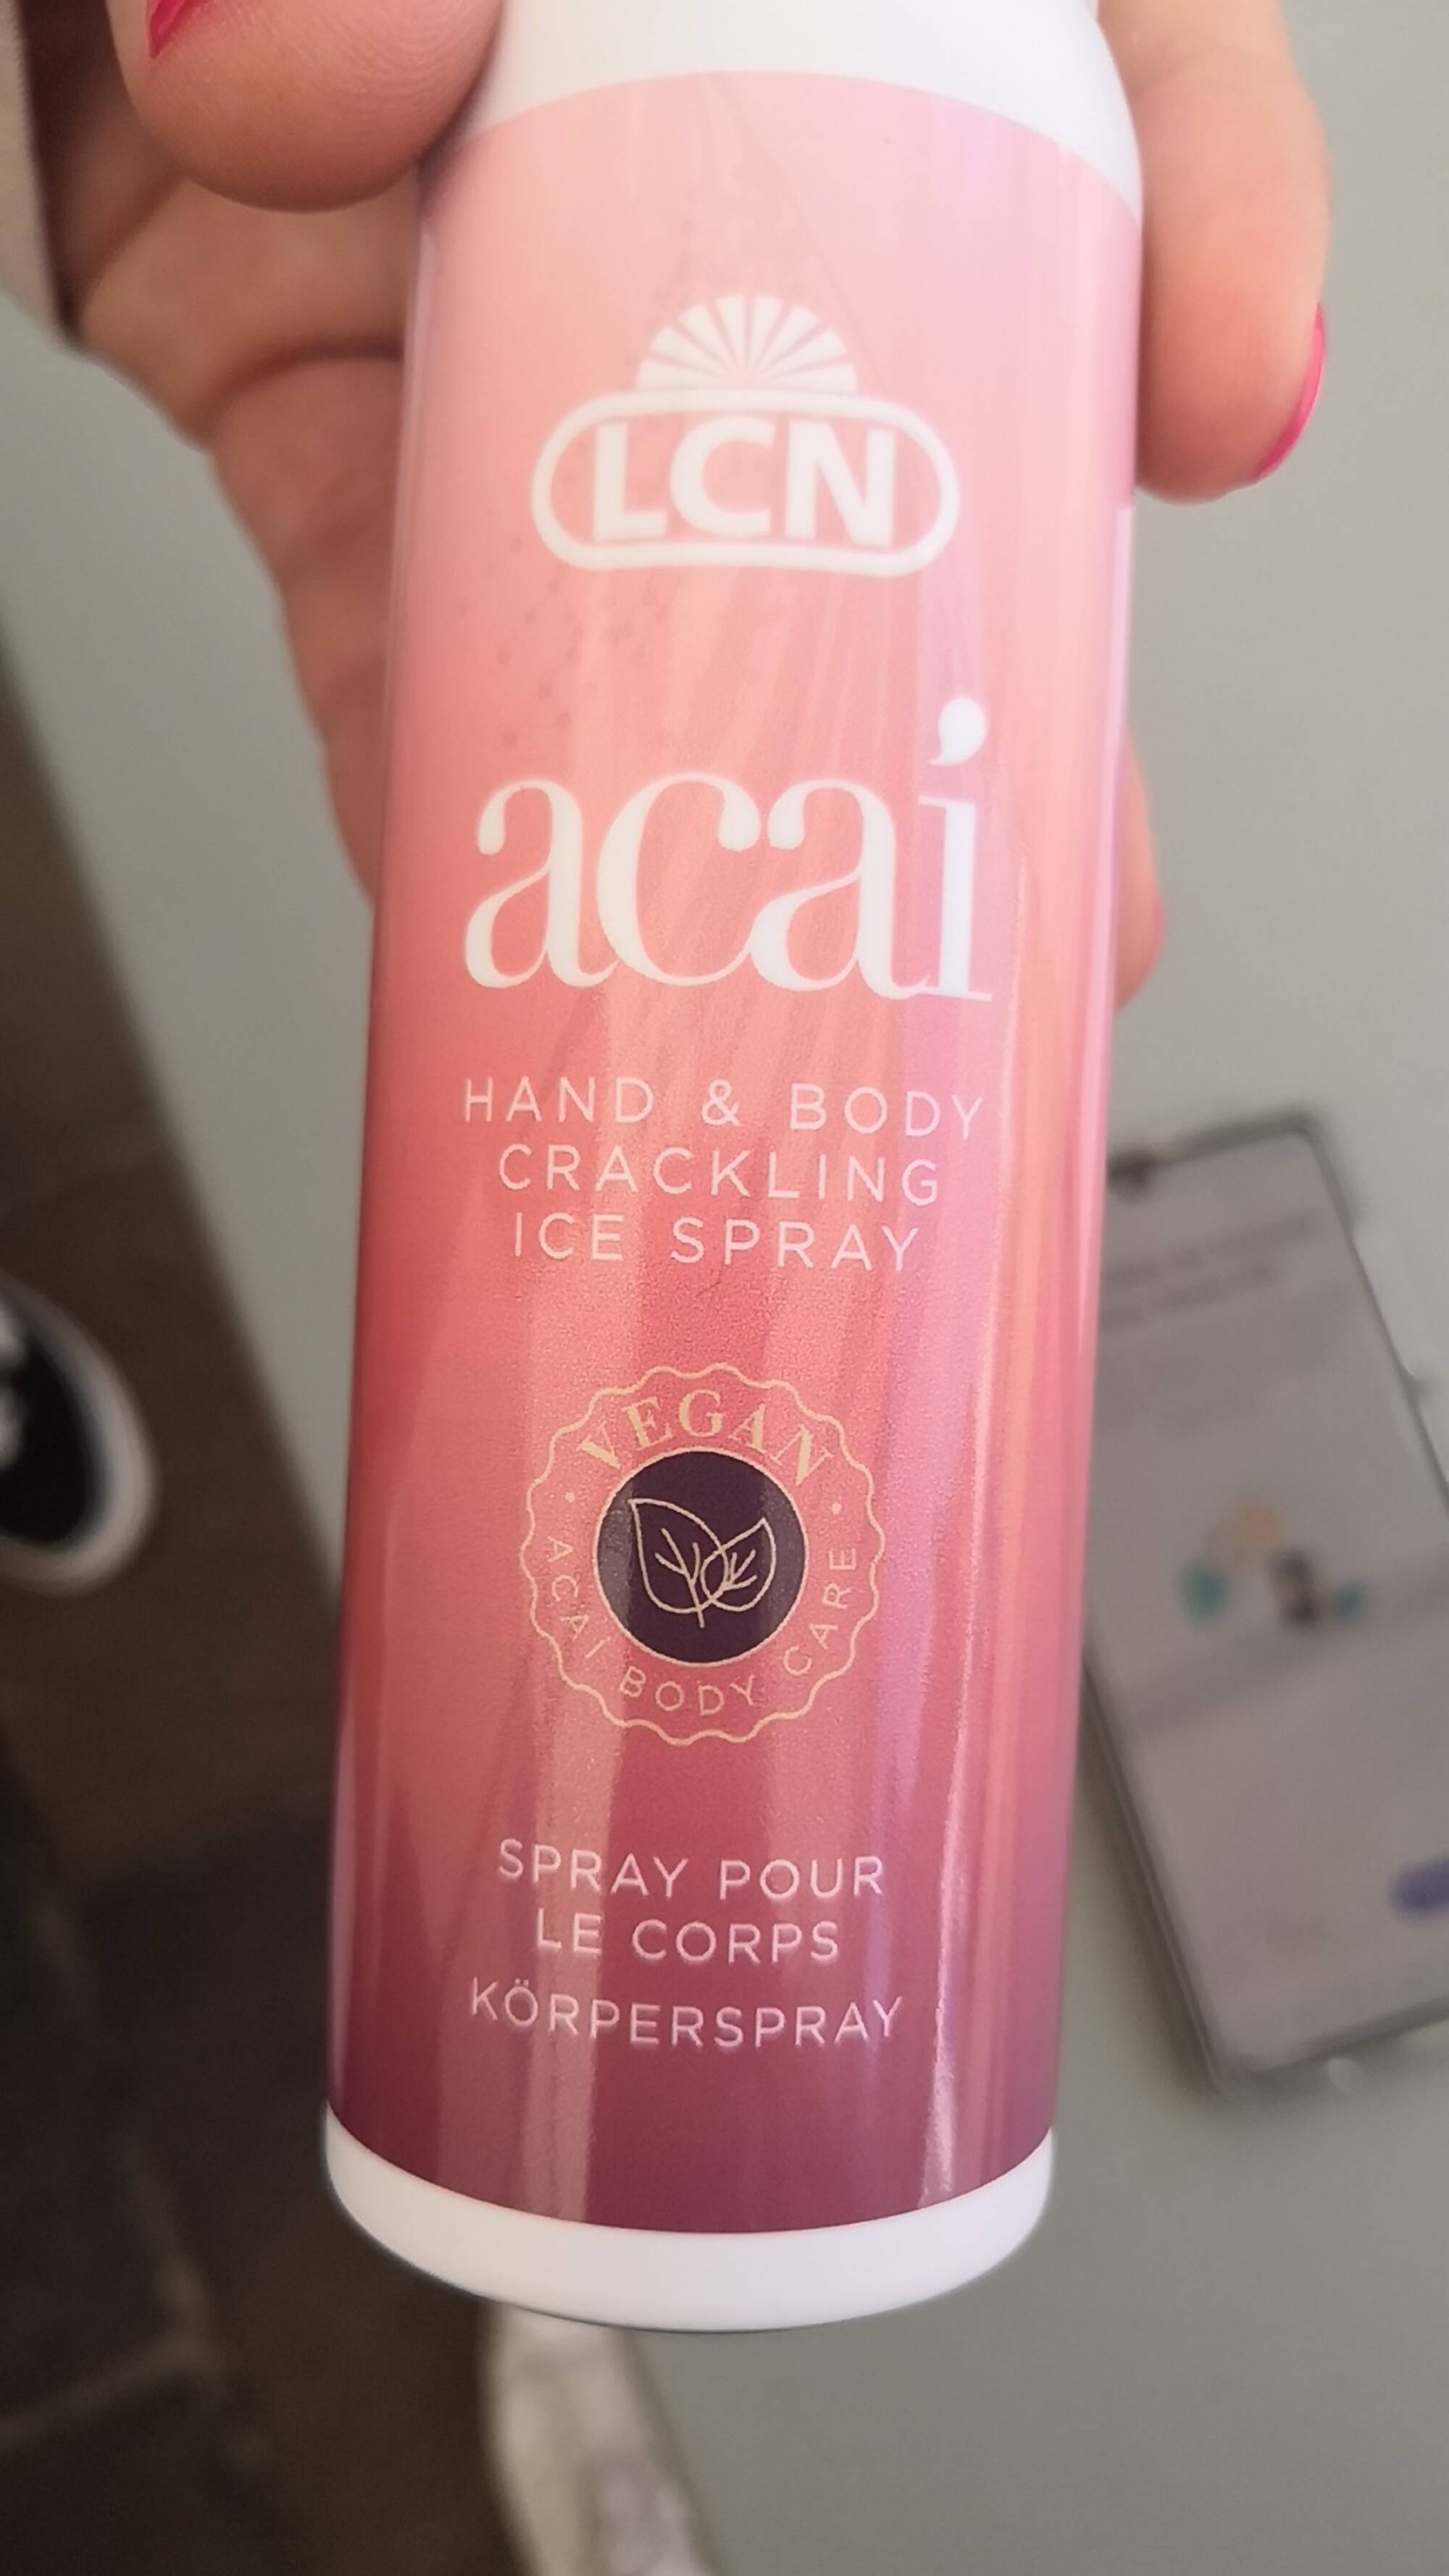 LCN - Acai - Hand & body crackling ice spray